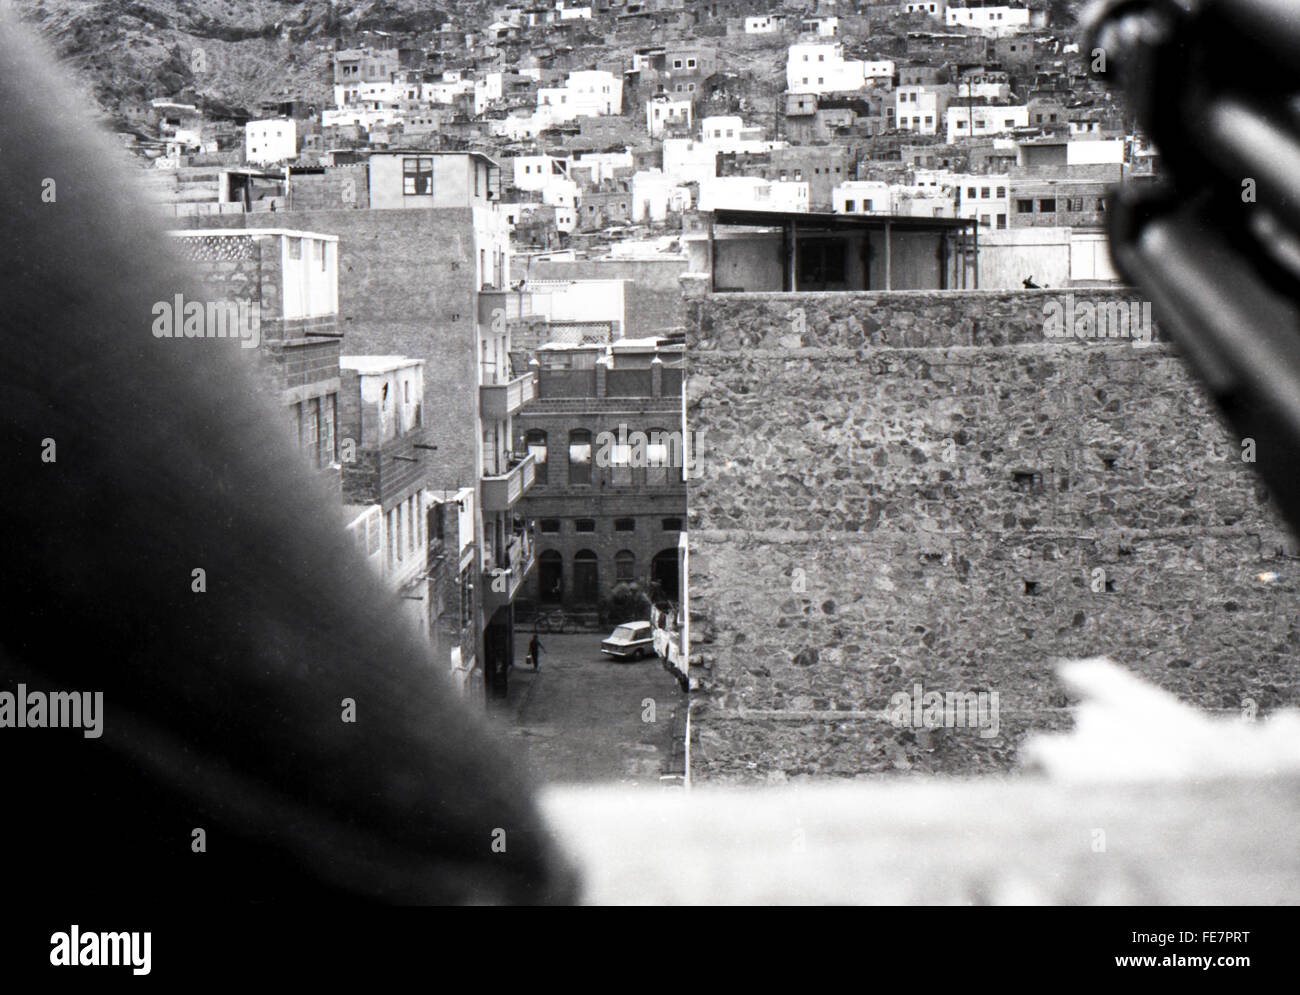 42 Cdo RM front line bullet scarred huts Aden Yemen 1967 British withdrawal Stock Photo